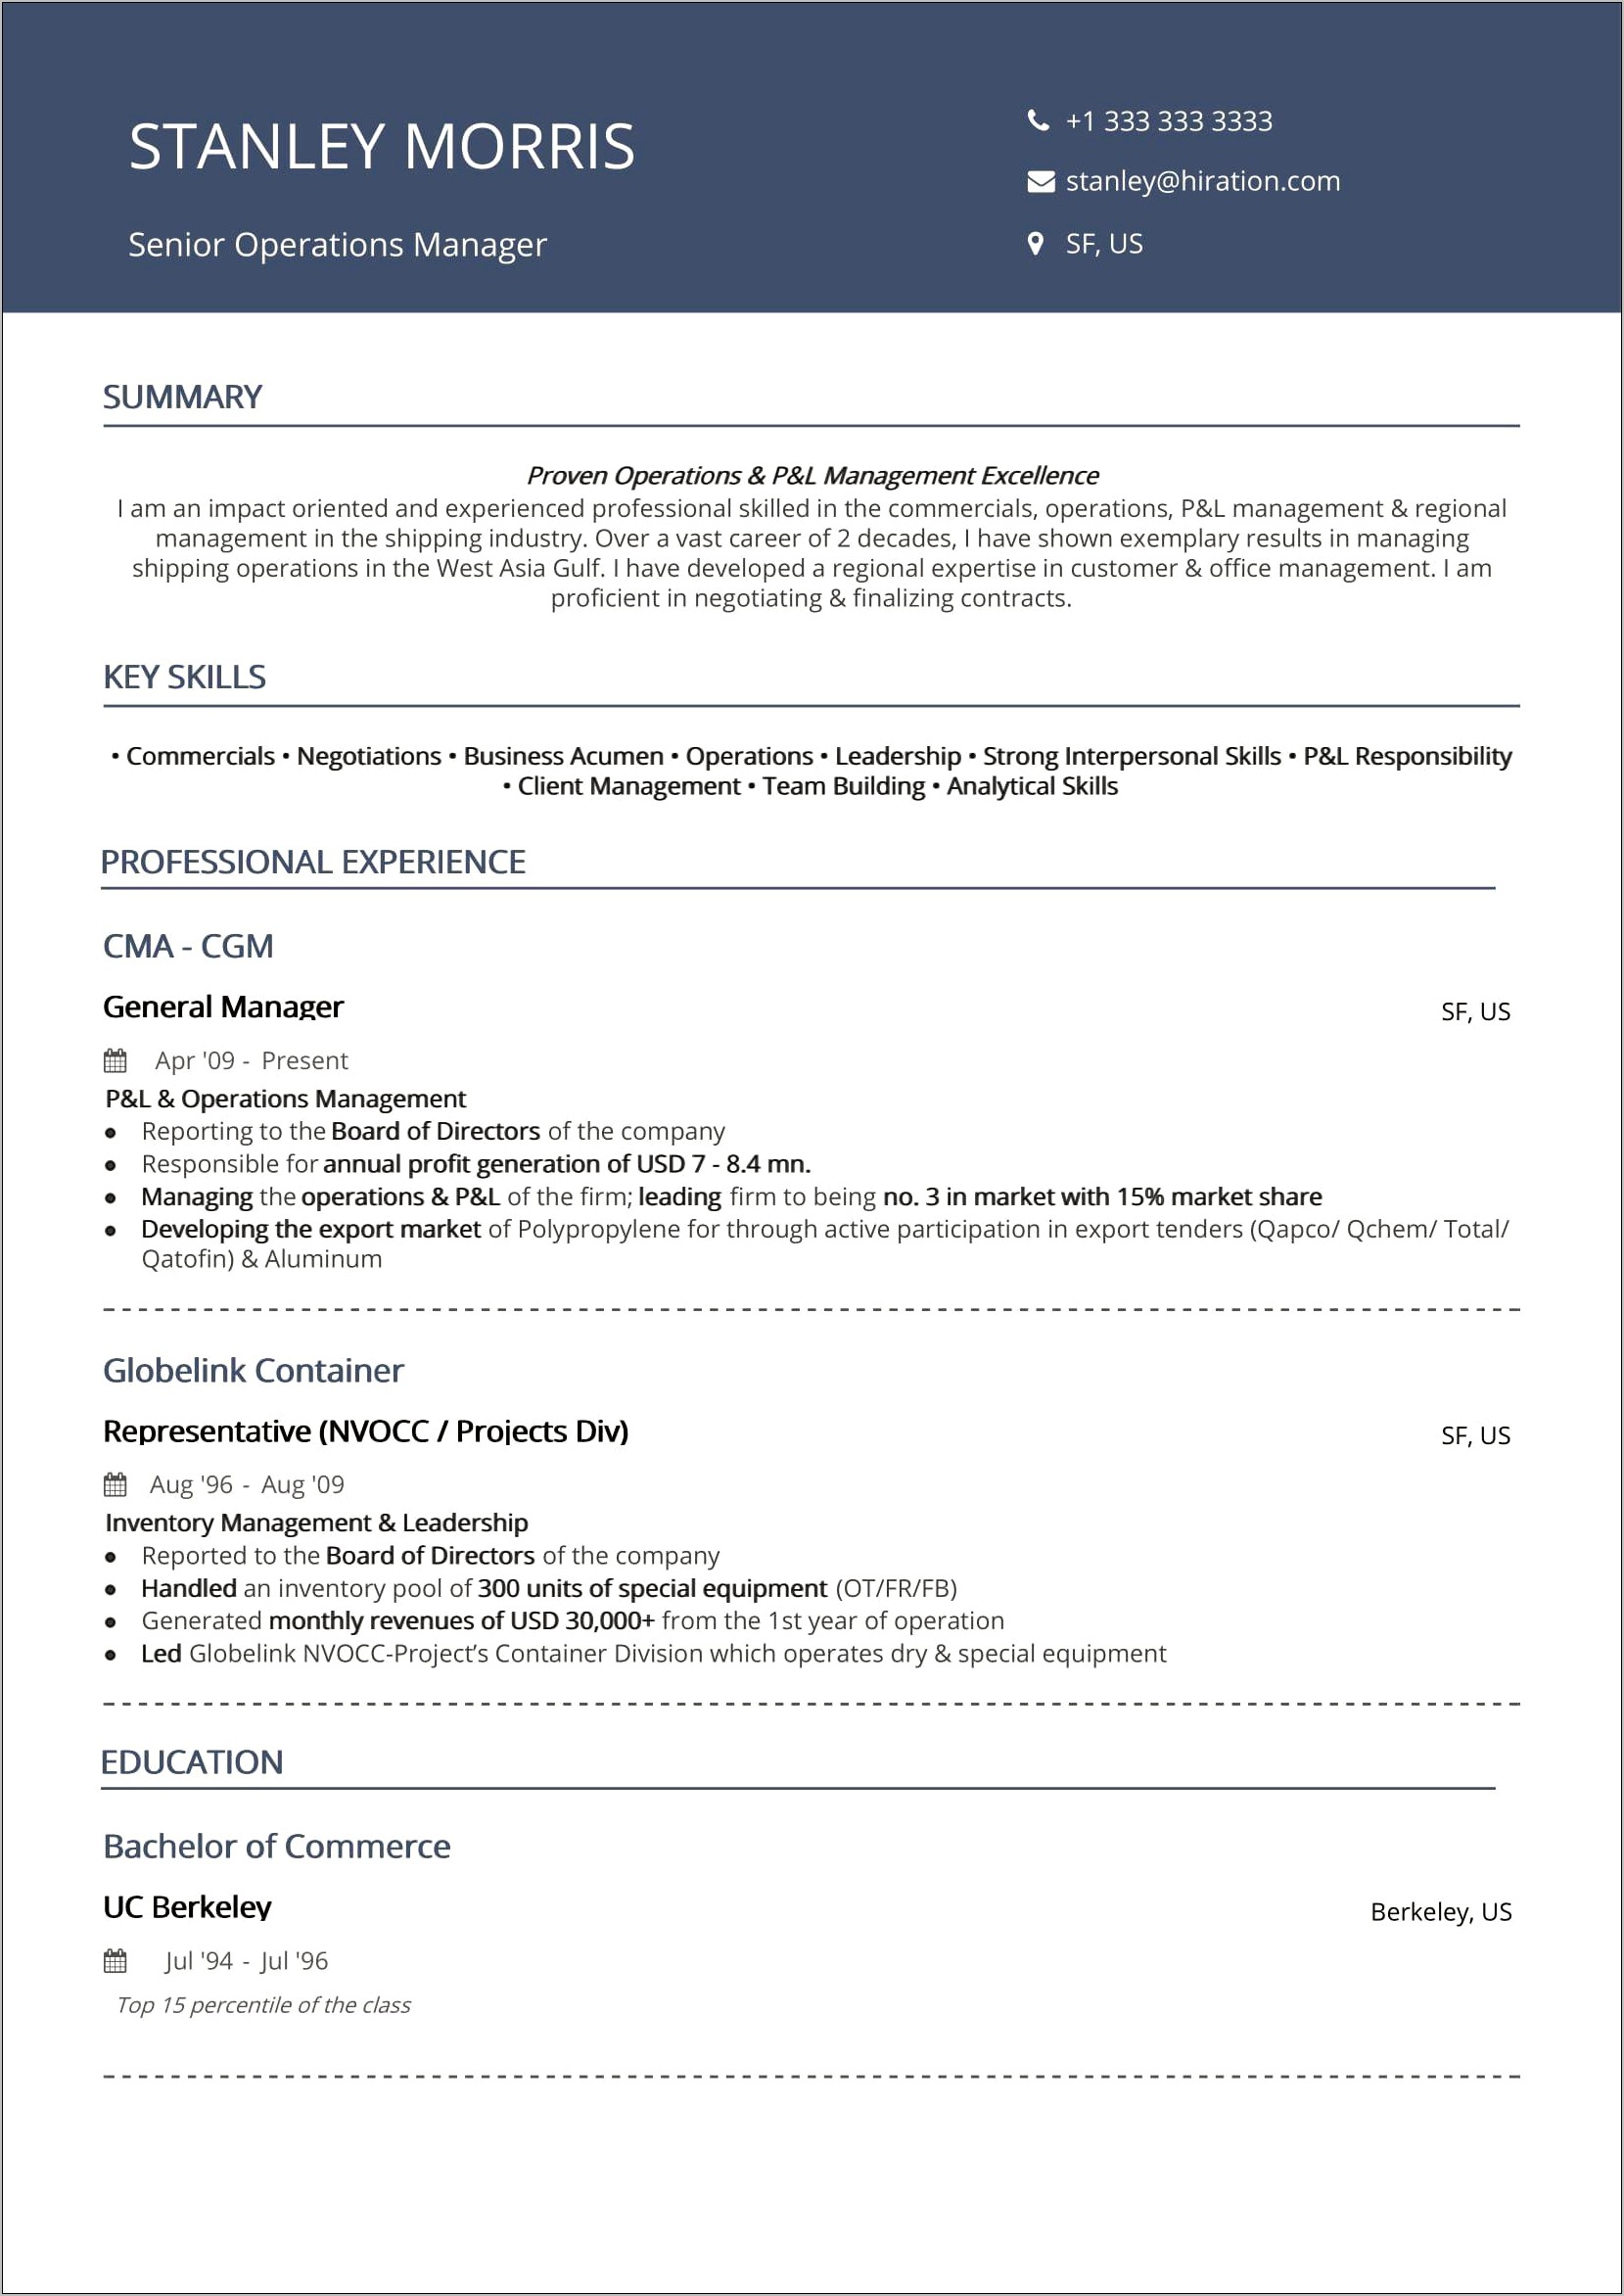 Plant Manager Job Description For Resume